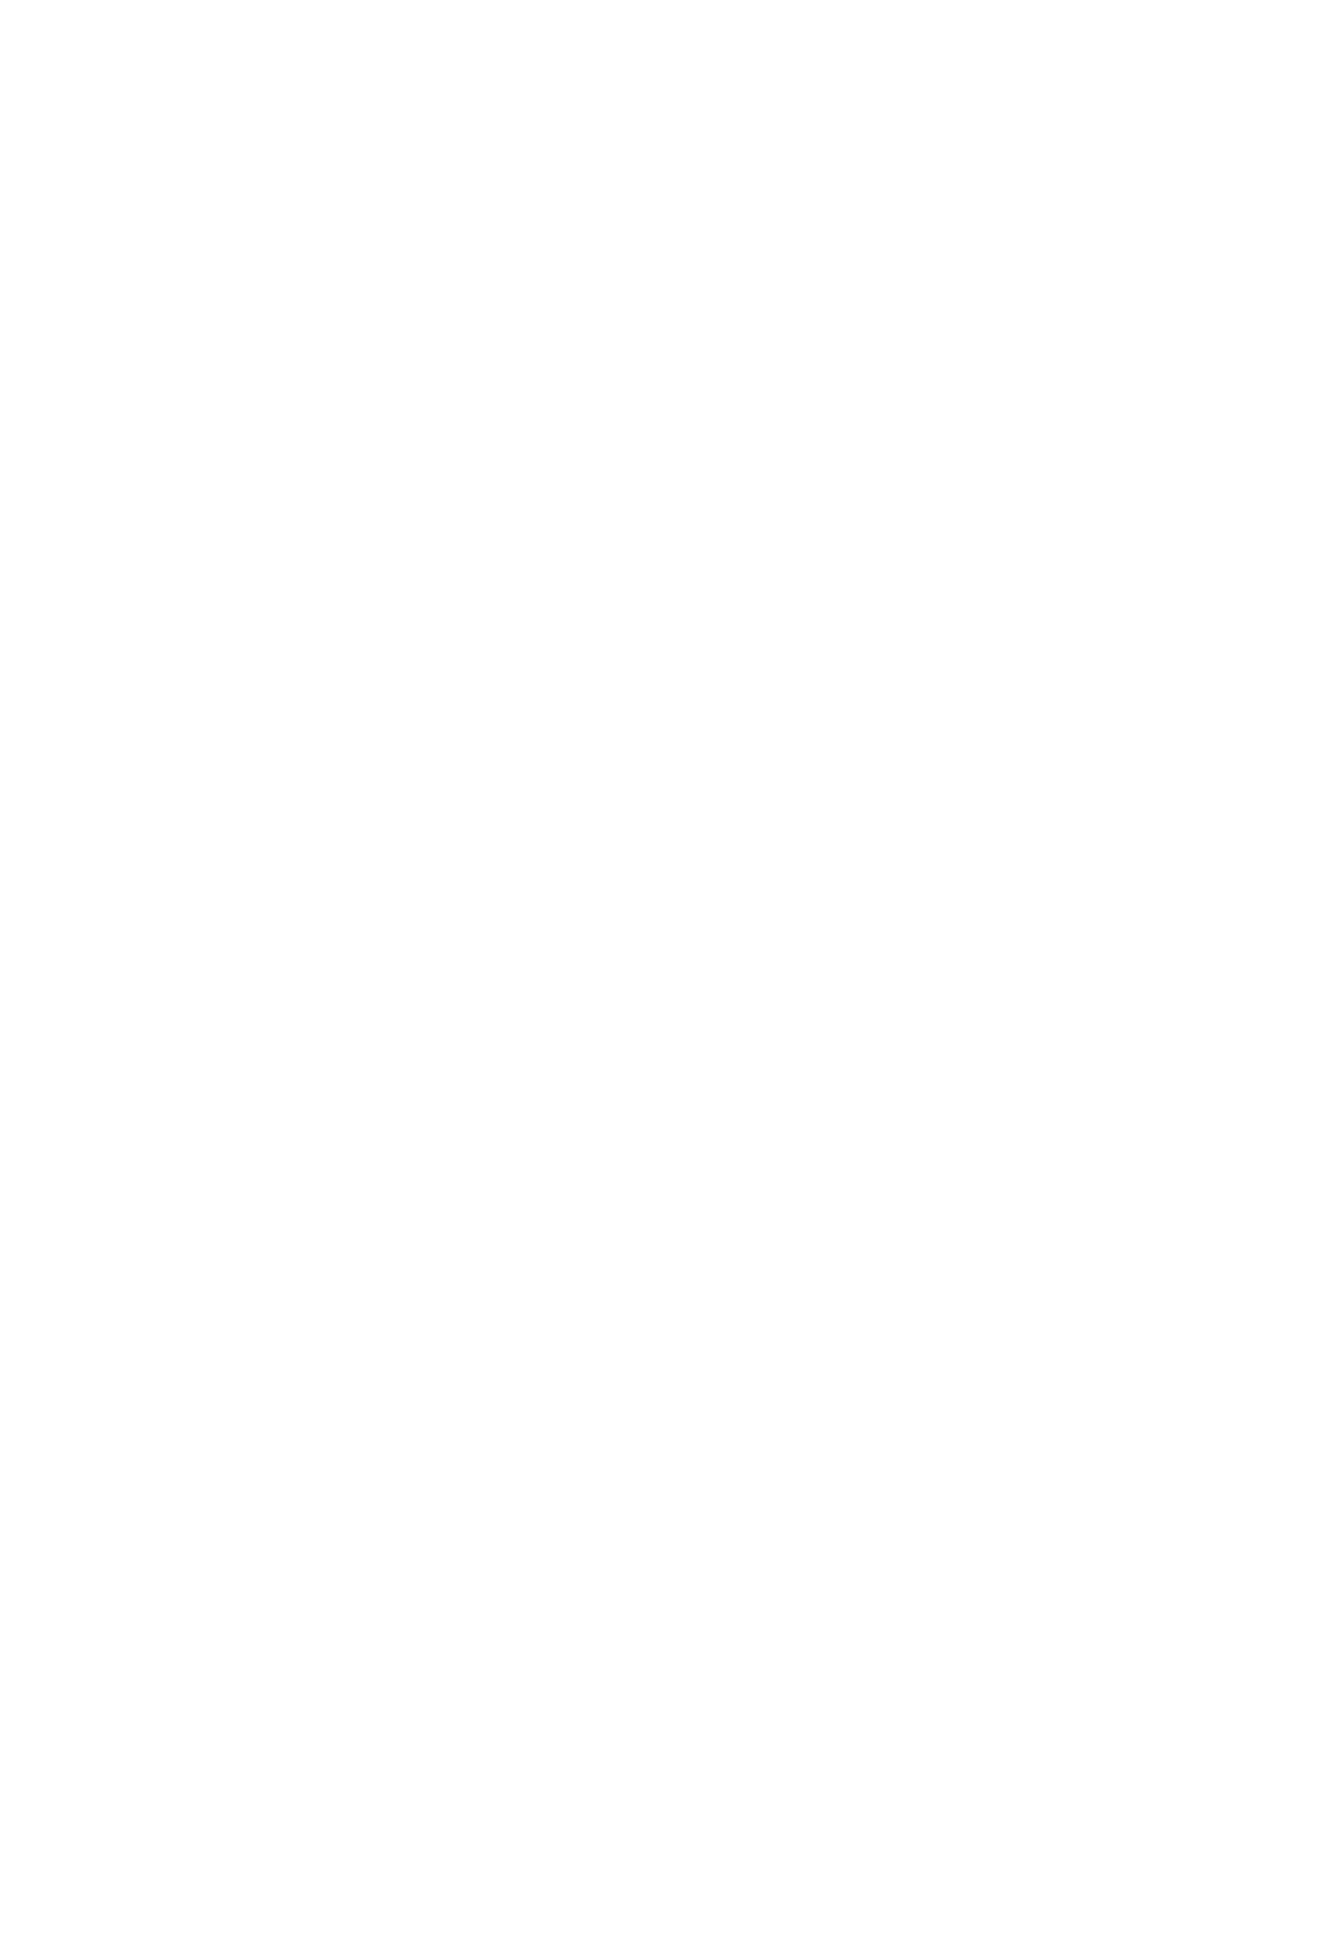 Bridge of Mission International